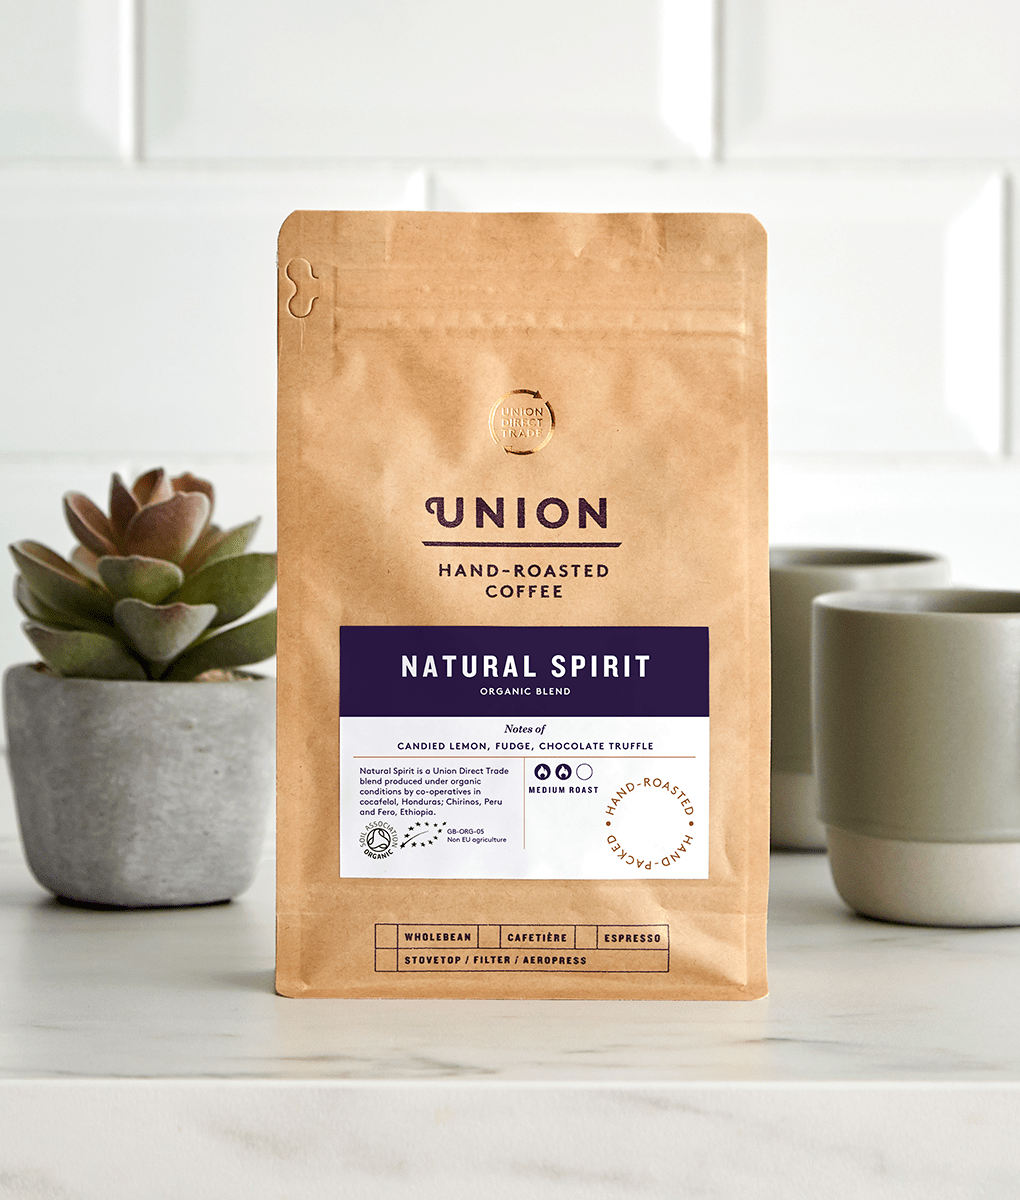 Natural Spirit, Organic Blend | Union Hand-Roasted Coffee – Union Coffee